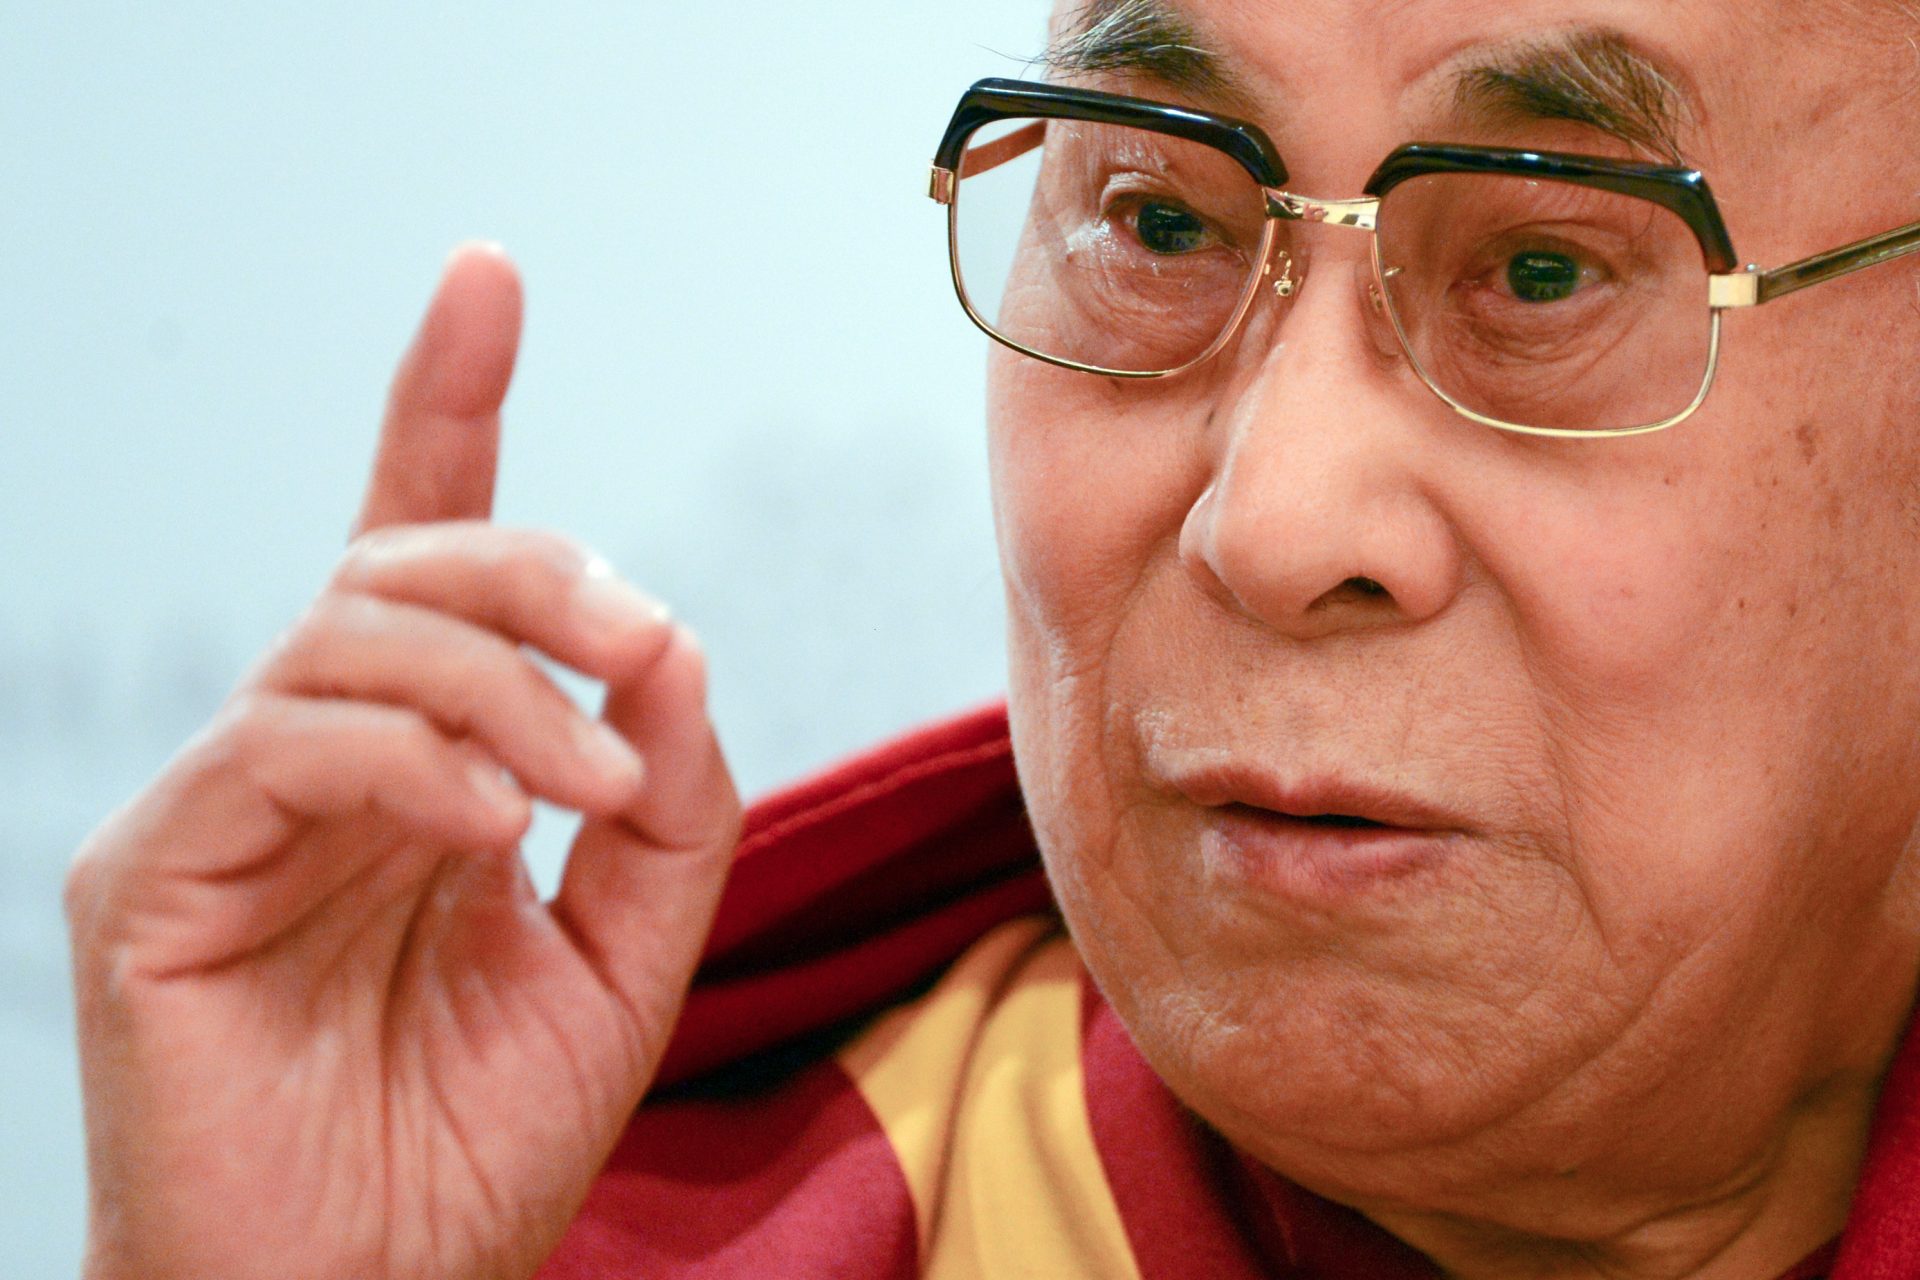 This is the Dalai Lama